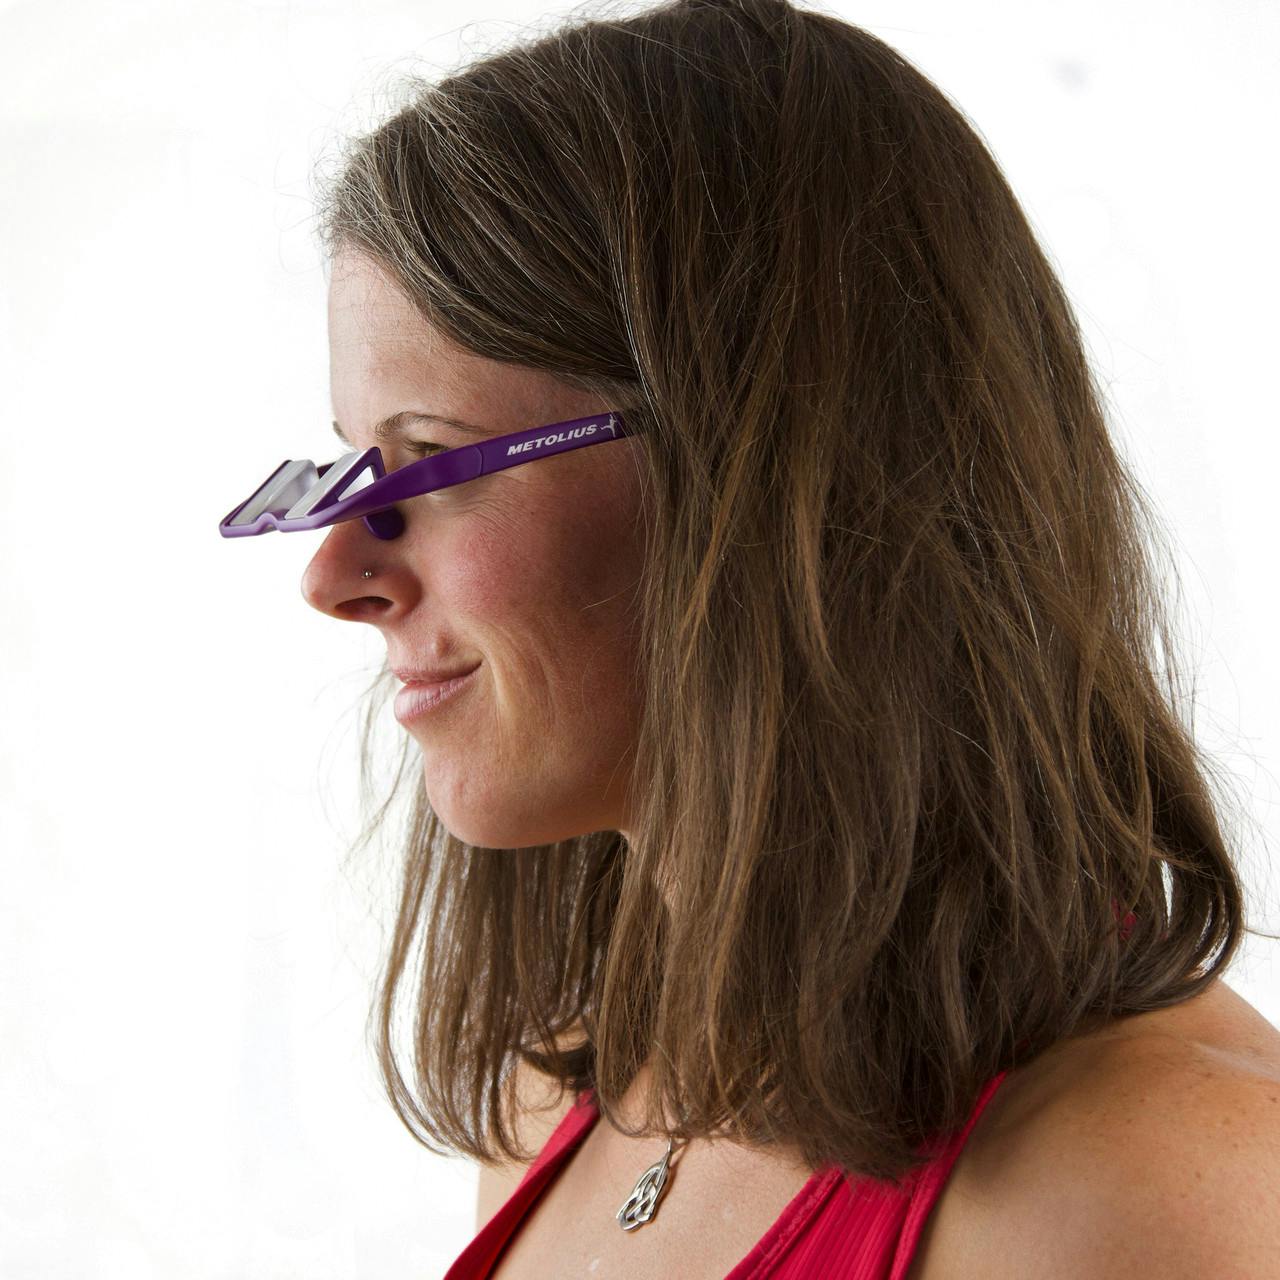 Upshot Belay Glasses Purple